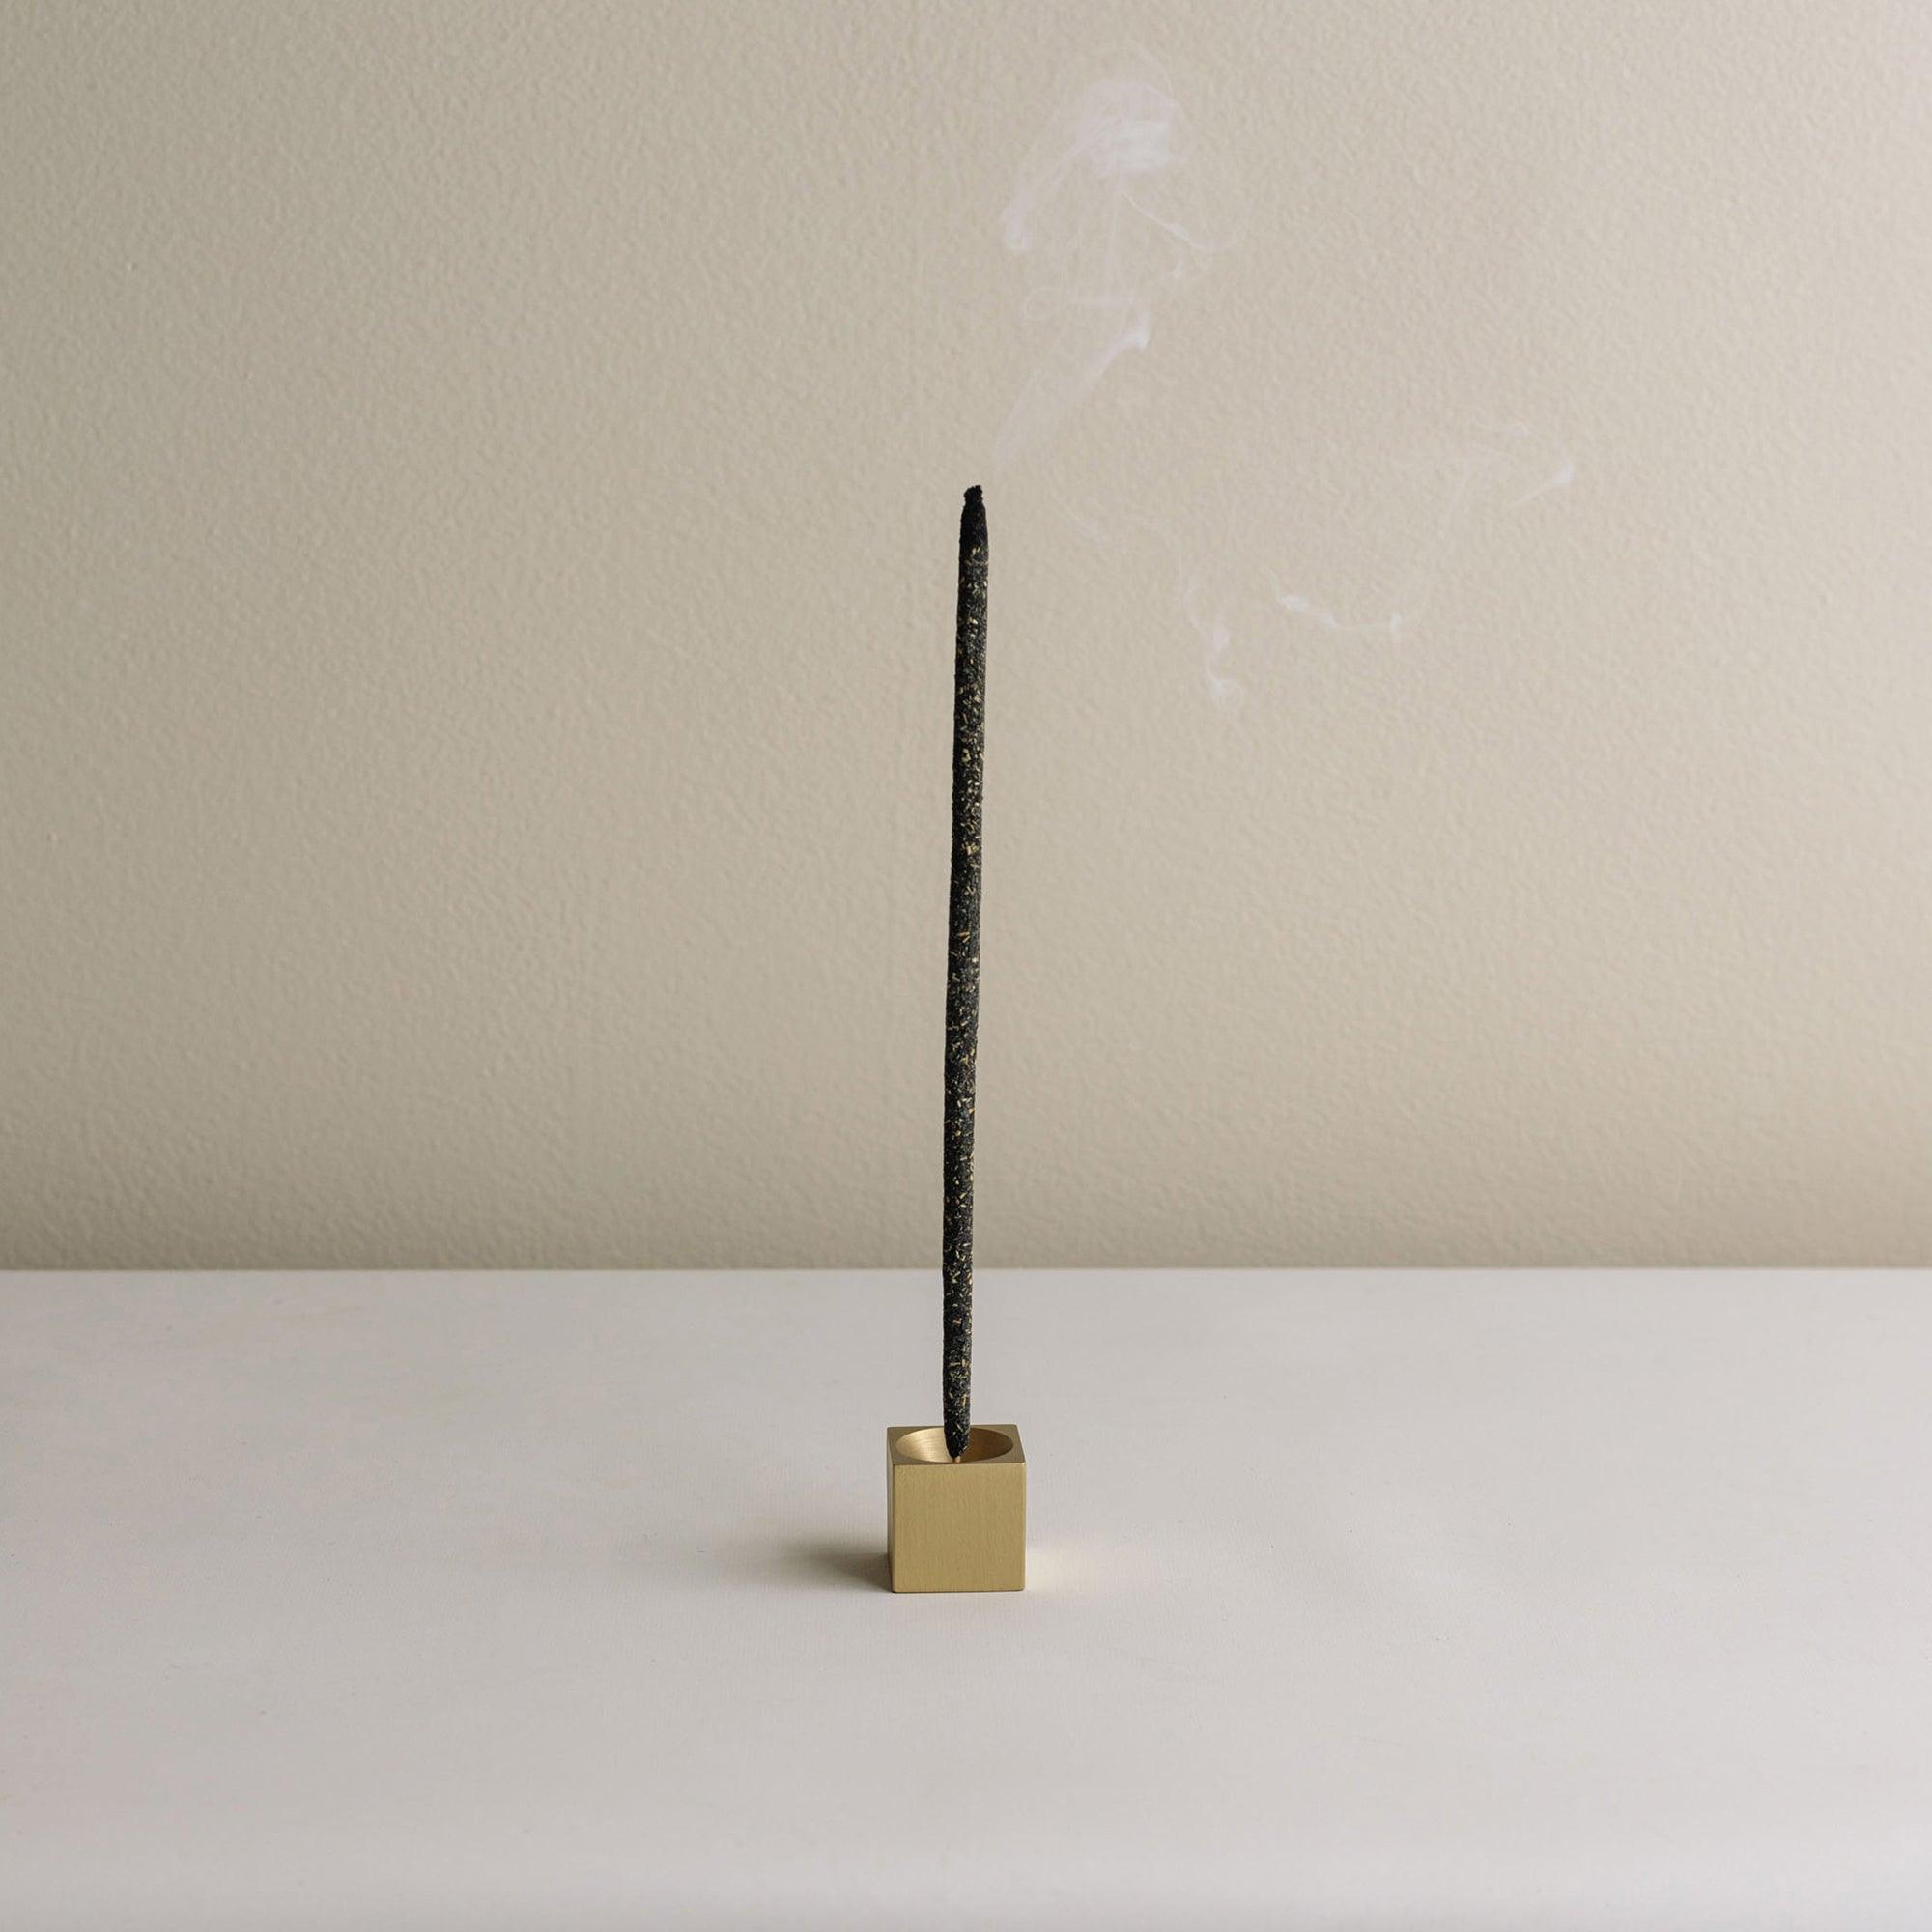 burning incense stick with cubic incense holder 